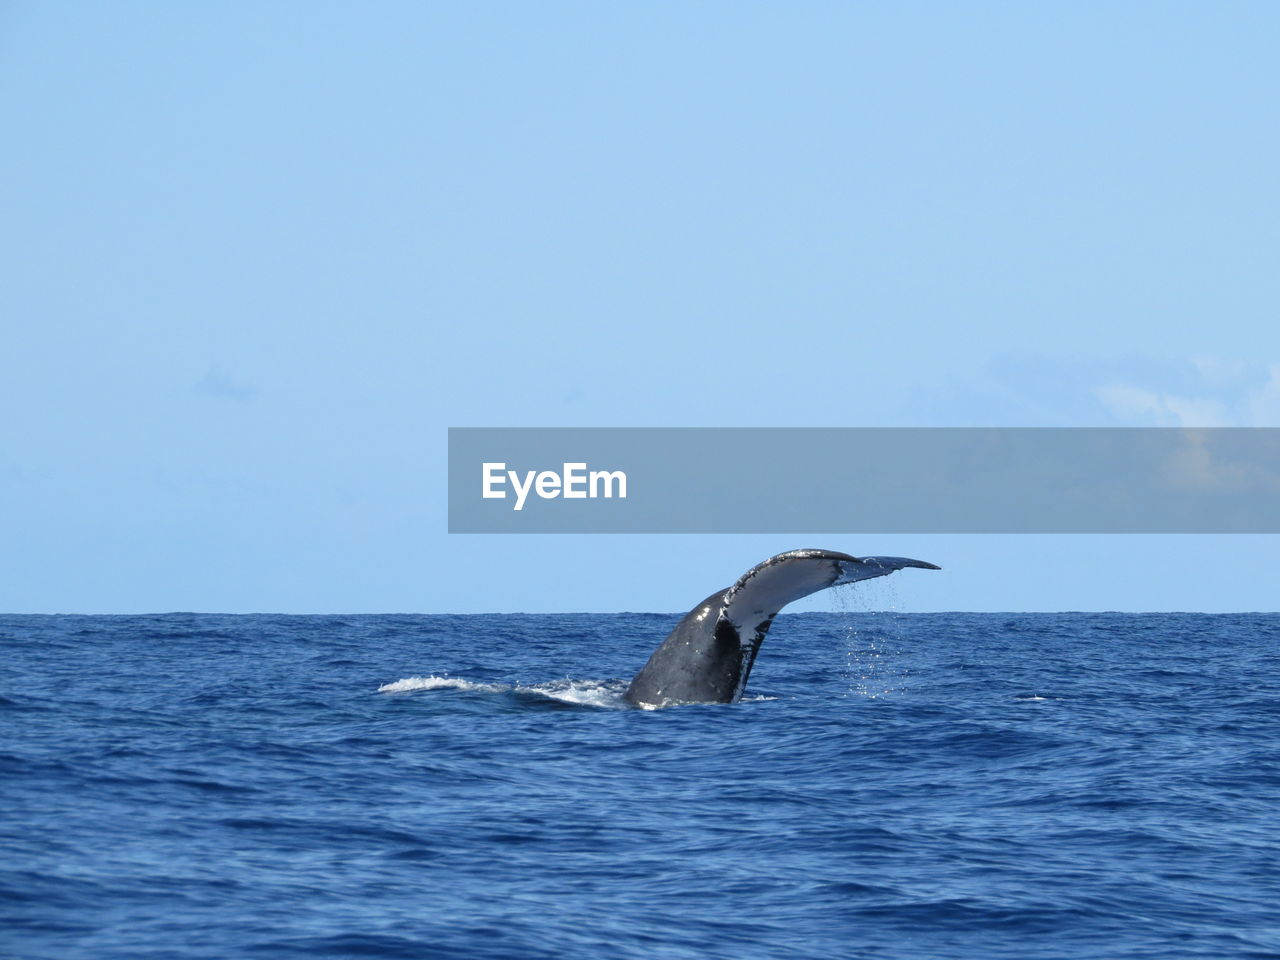 Whale in calm blue sea